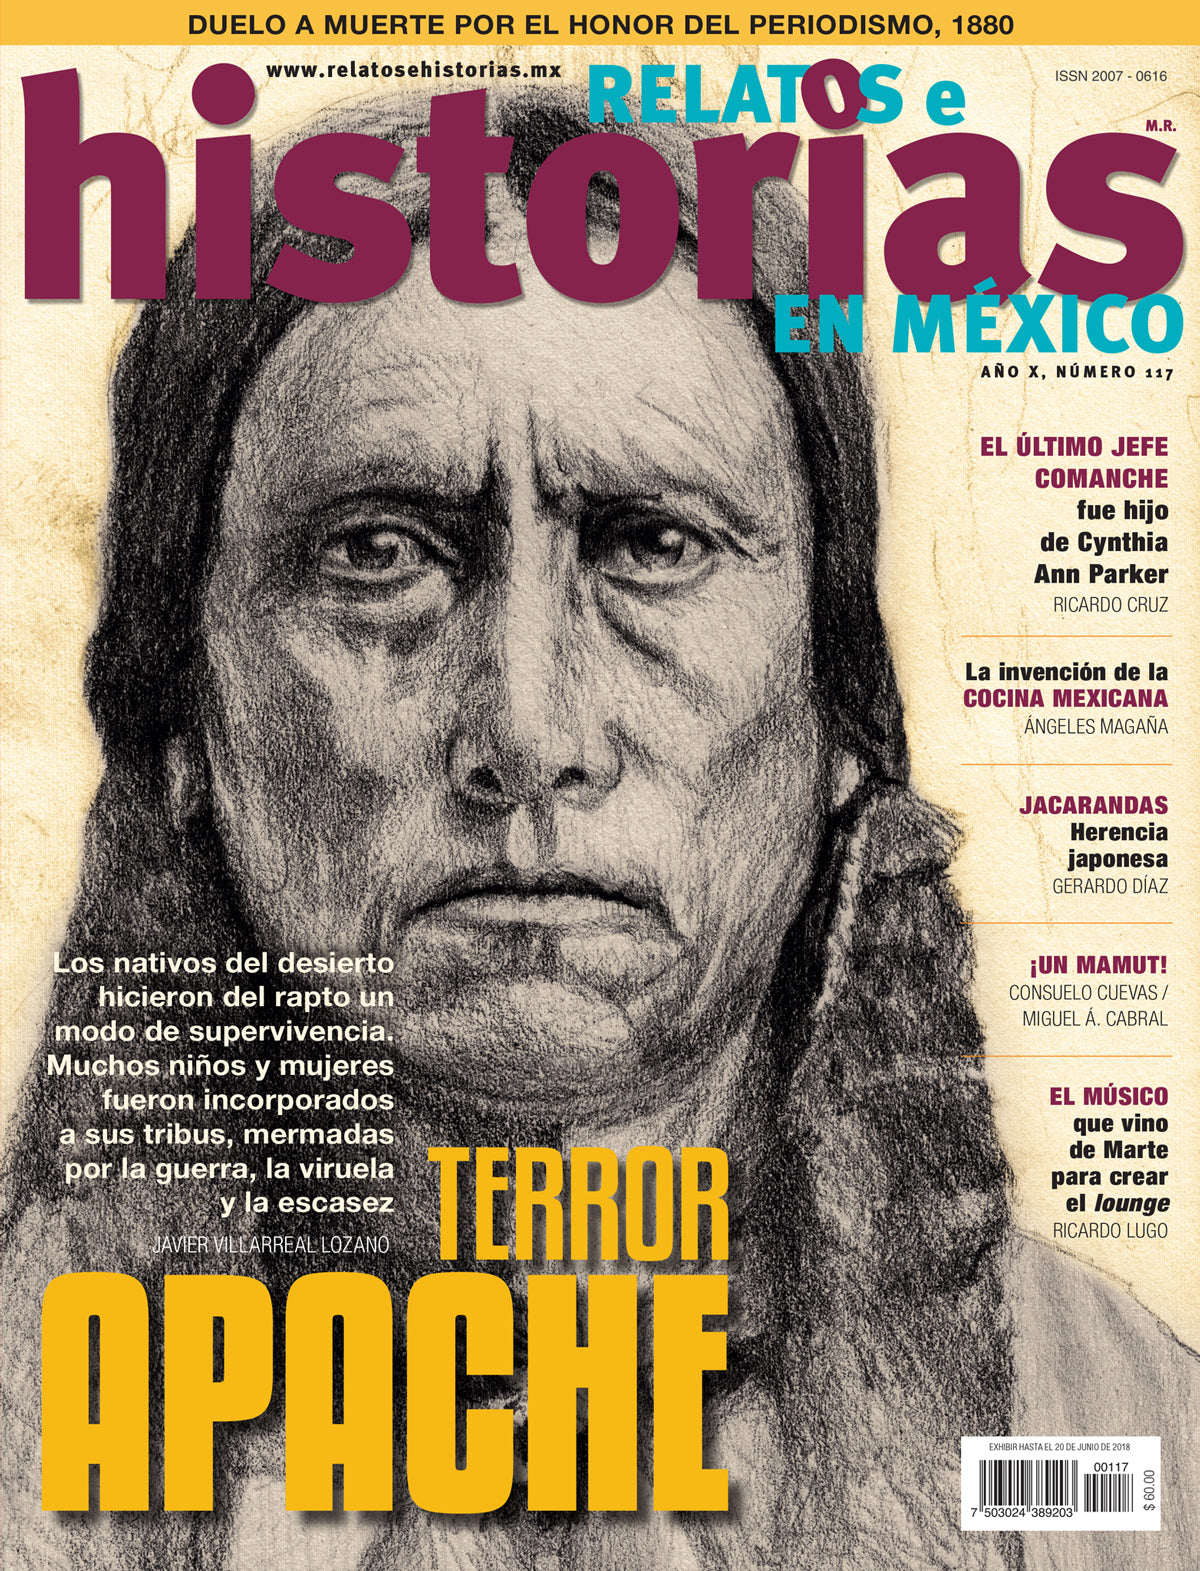 Terror Apache